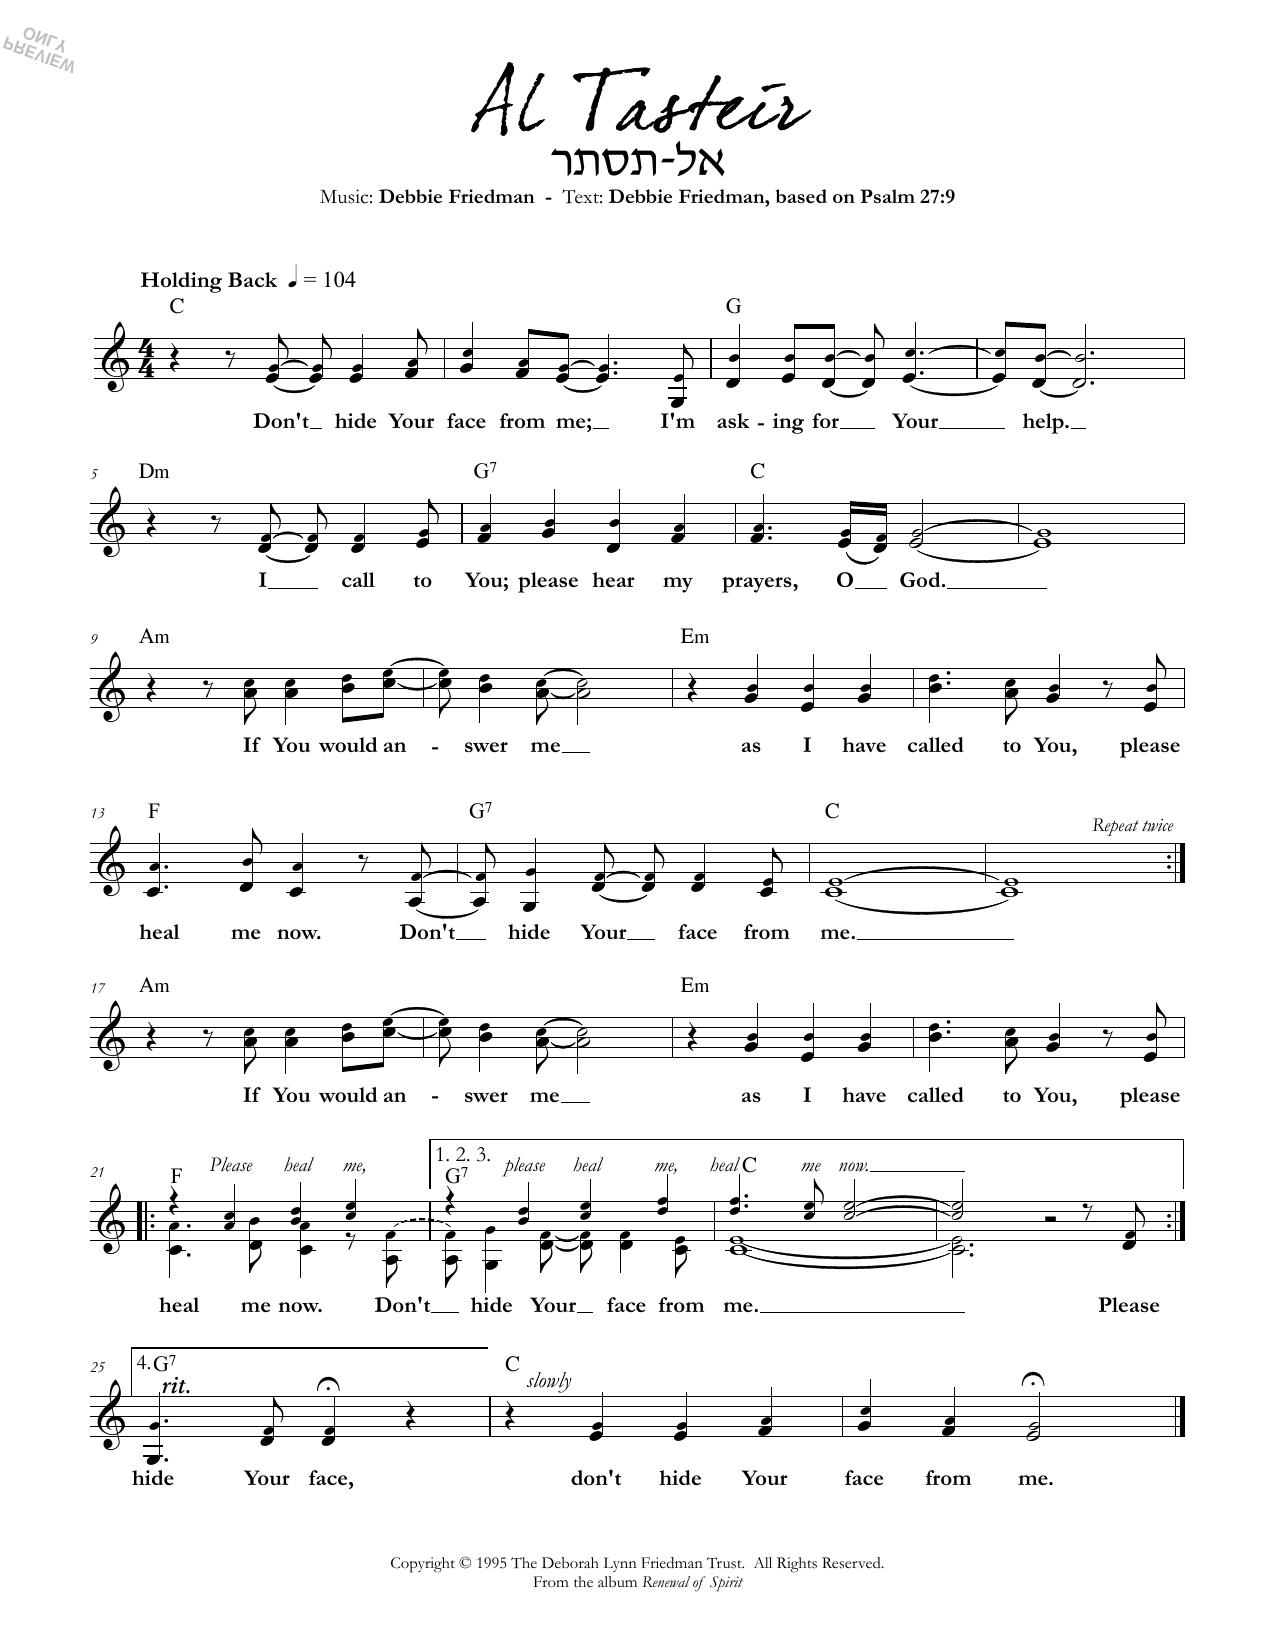 Download Debbie Friedman Al Tasteir Sheet Music and learn how to play Lead Sheet / Fake Book PDF digital score in minutes